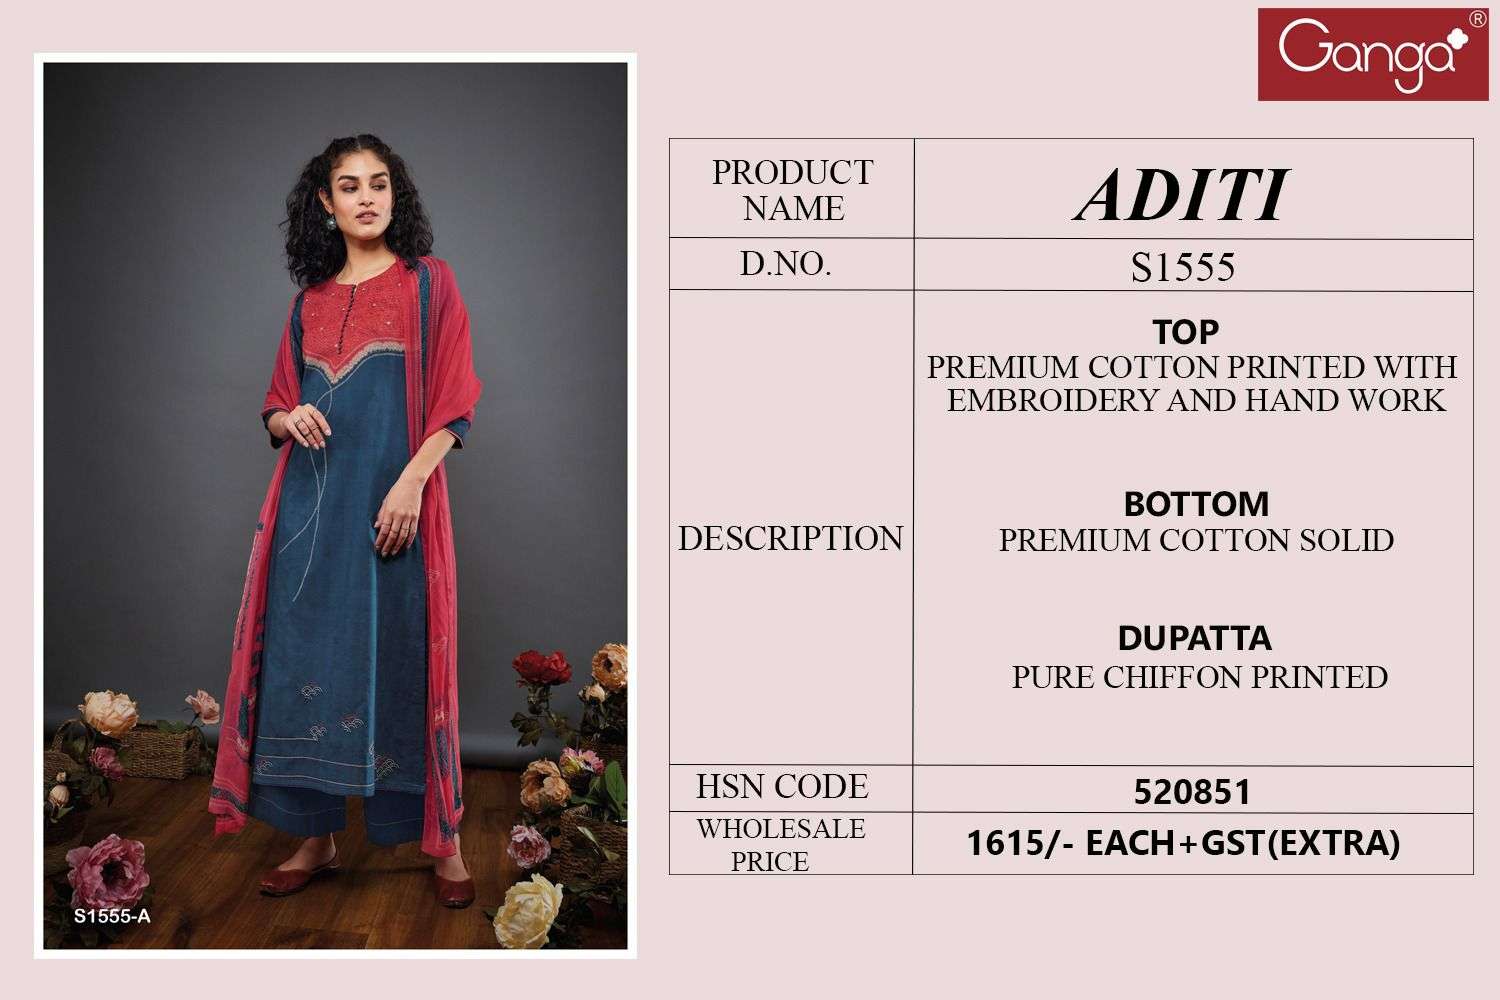 Aditi Ganga Fashions Aqsawholesale w Rate Fabric Details 3 2023 02 26 11 15 48